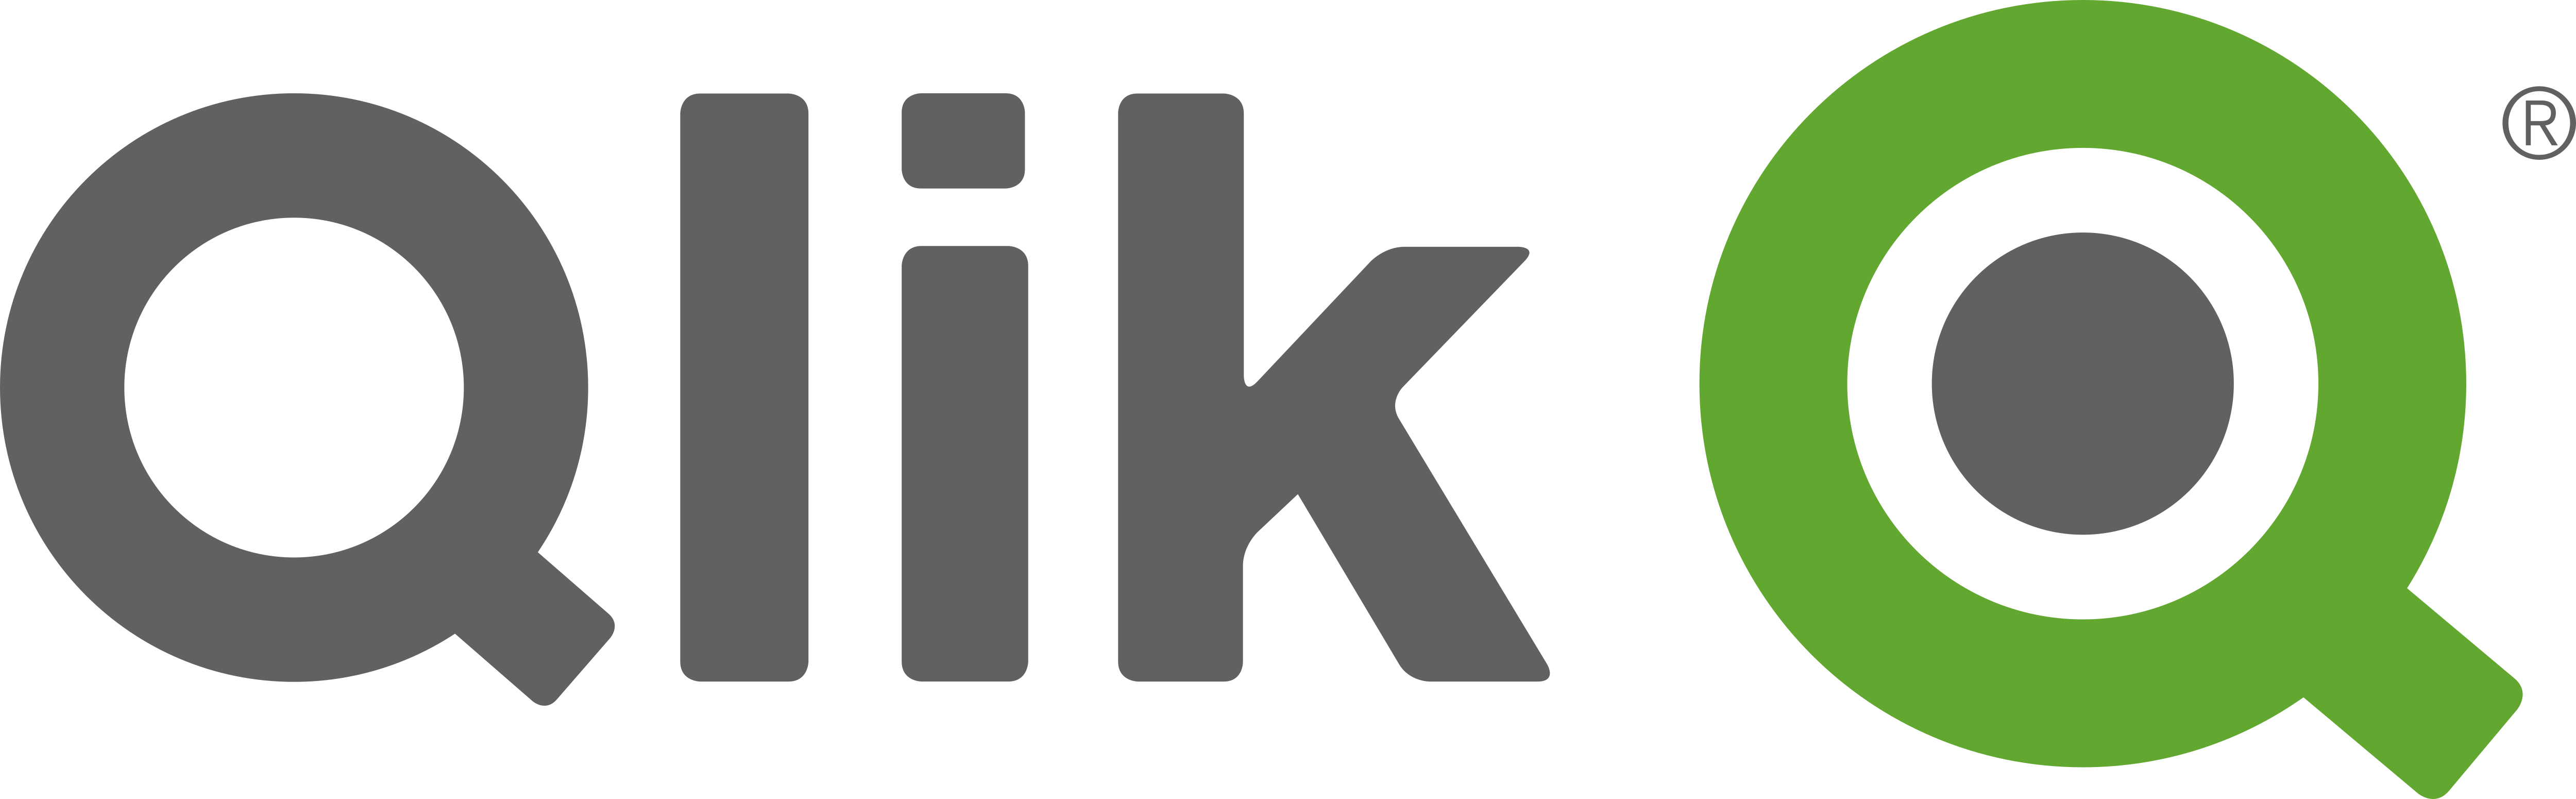 Logo of Qlik software